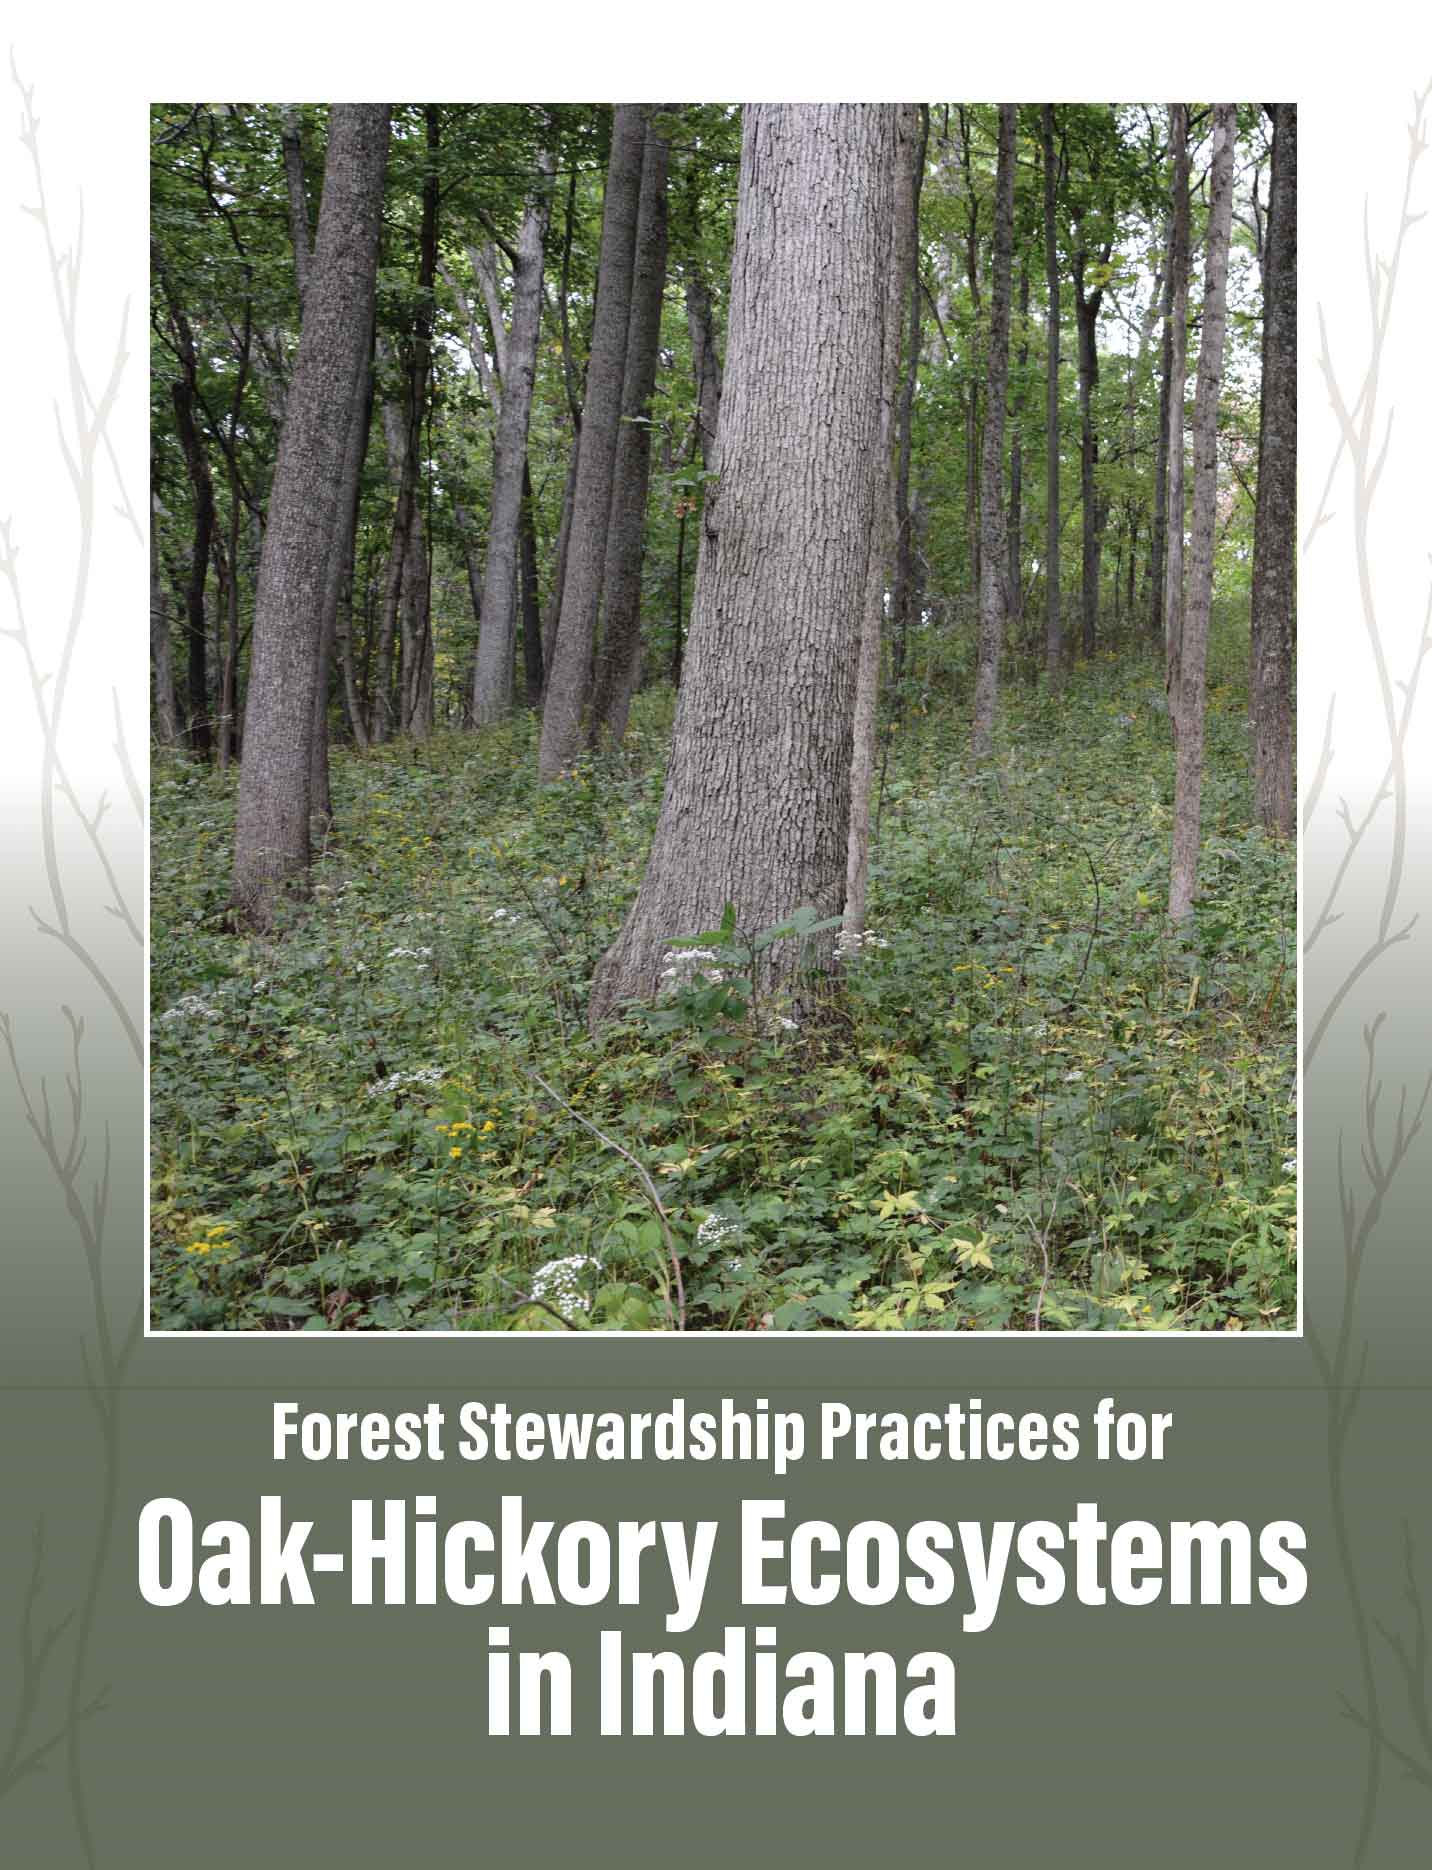 Cover for Oak-Hickory Ecosystem Publication